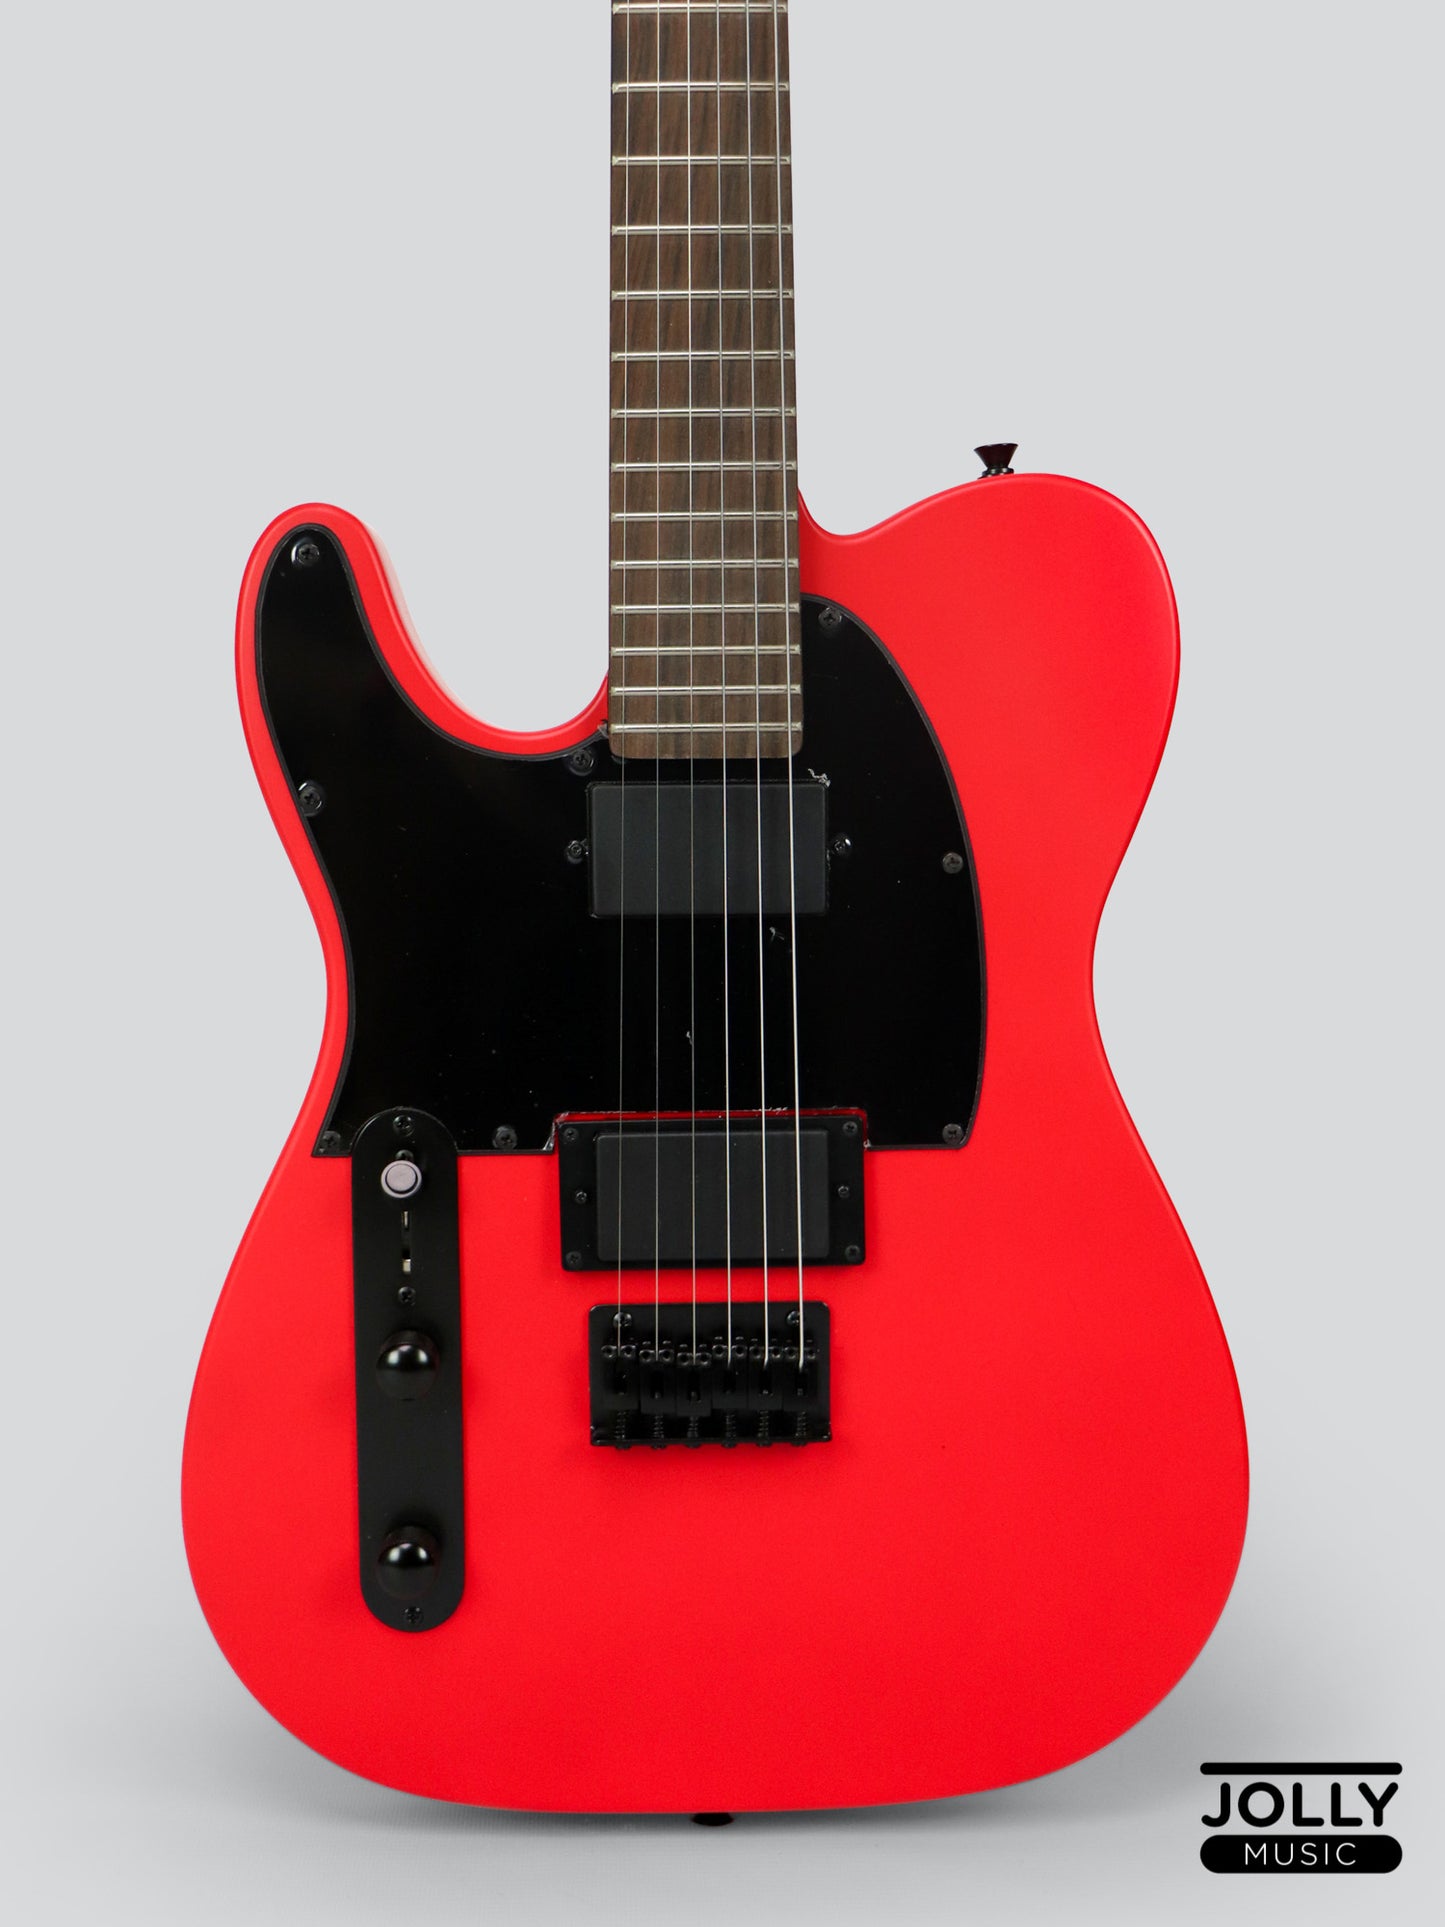 JCraft X Series LTX-1 LEFT HAND Electric Guitar with Gigbag - Snow